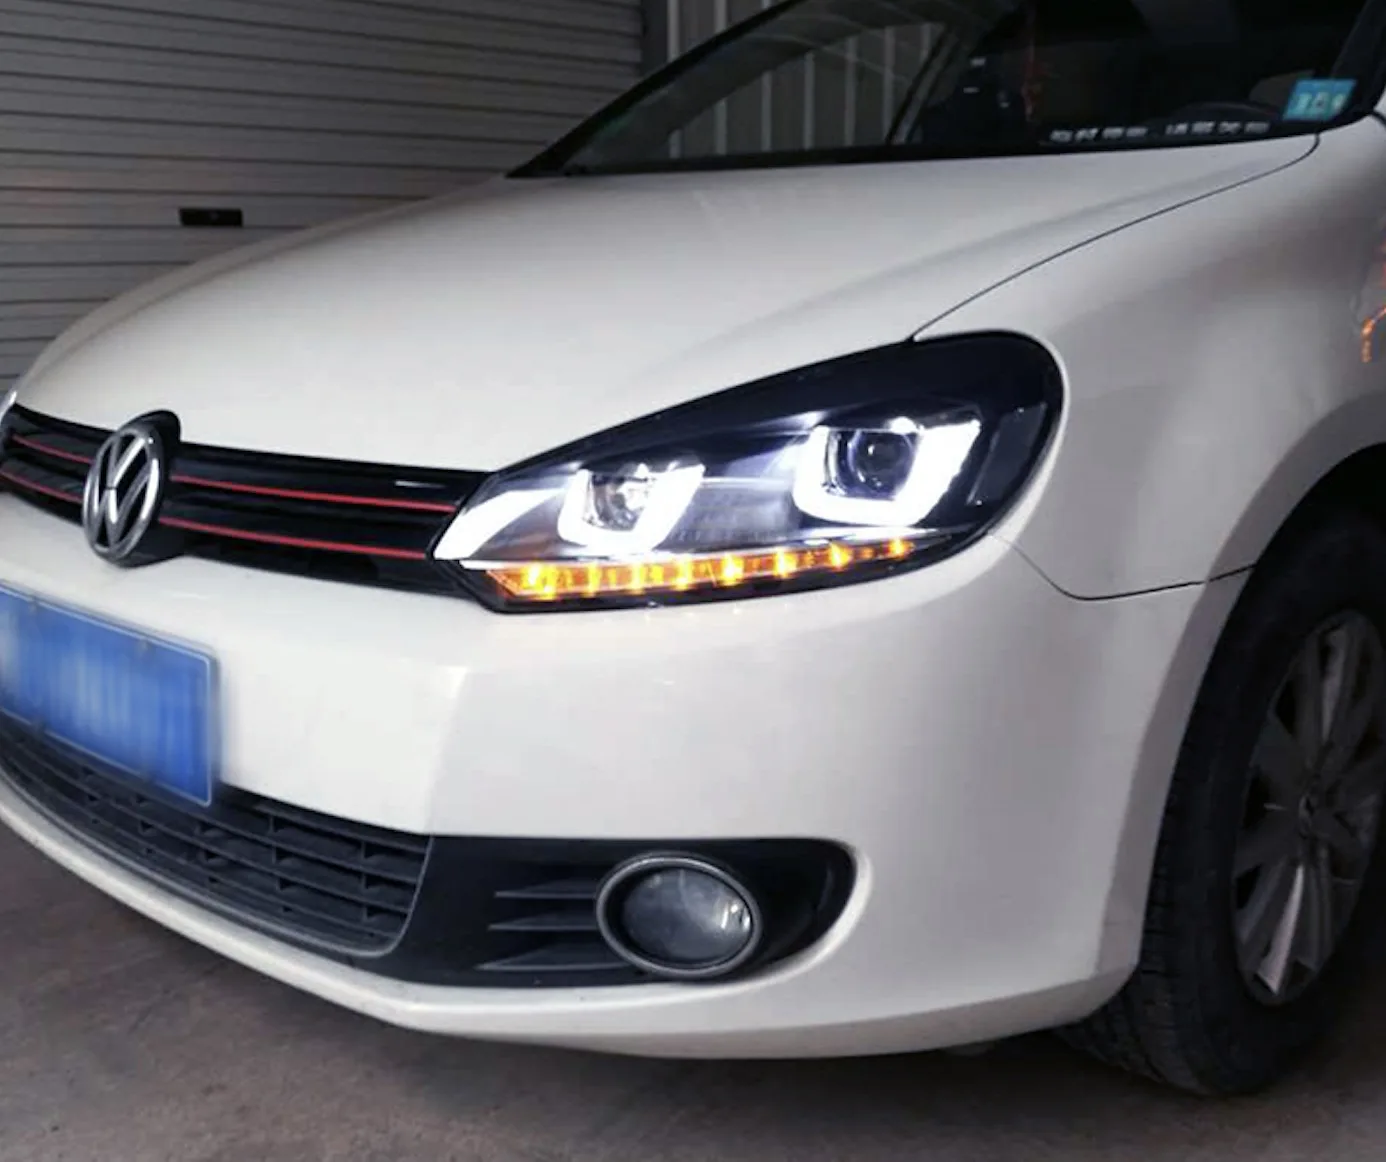 Volkswagen светодиодные фары. Golf mk6 led Headlights. Golf mk6 led China Headlights. Фара Фольксваген гольф 6. Фонари VW Jetta mk7.